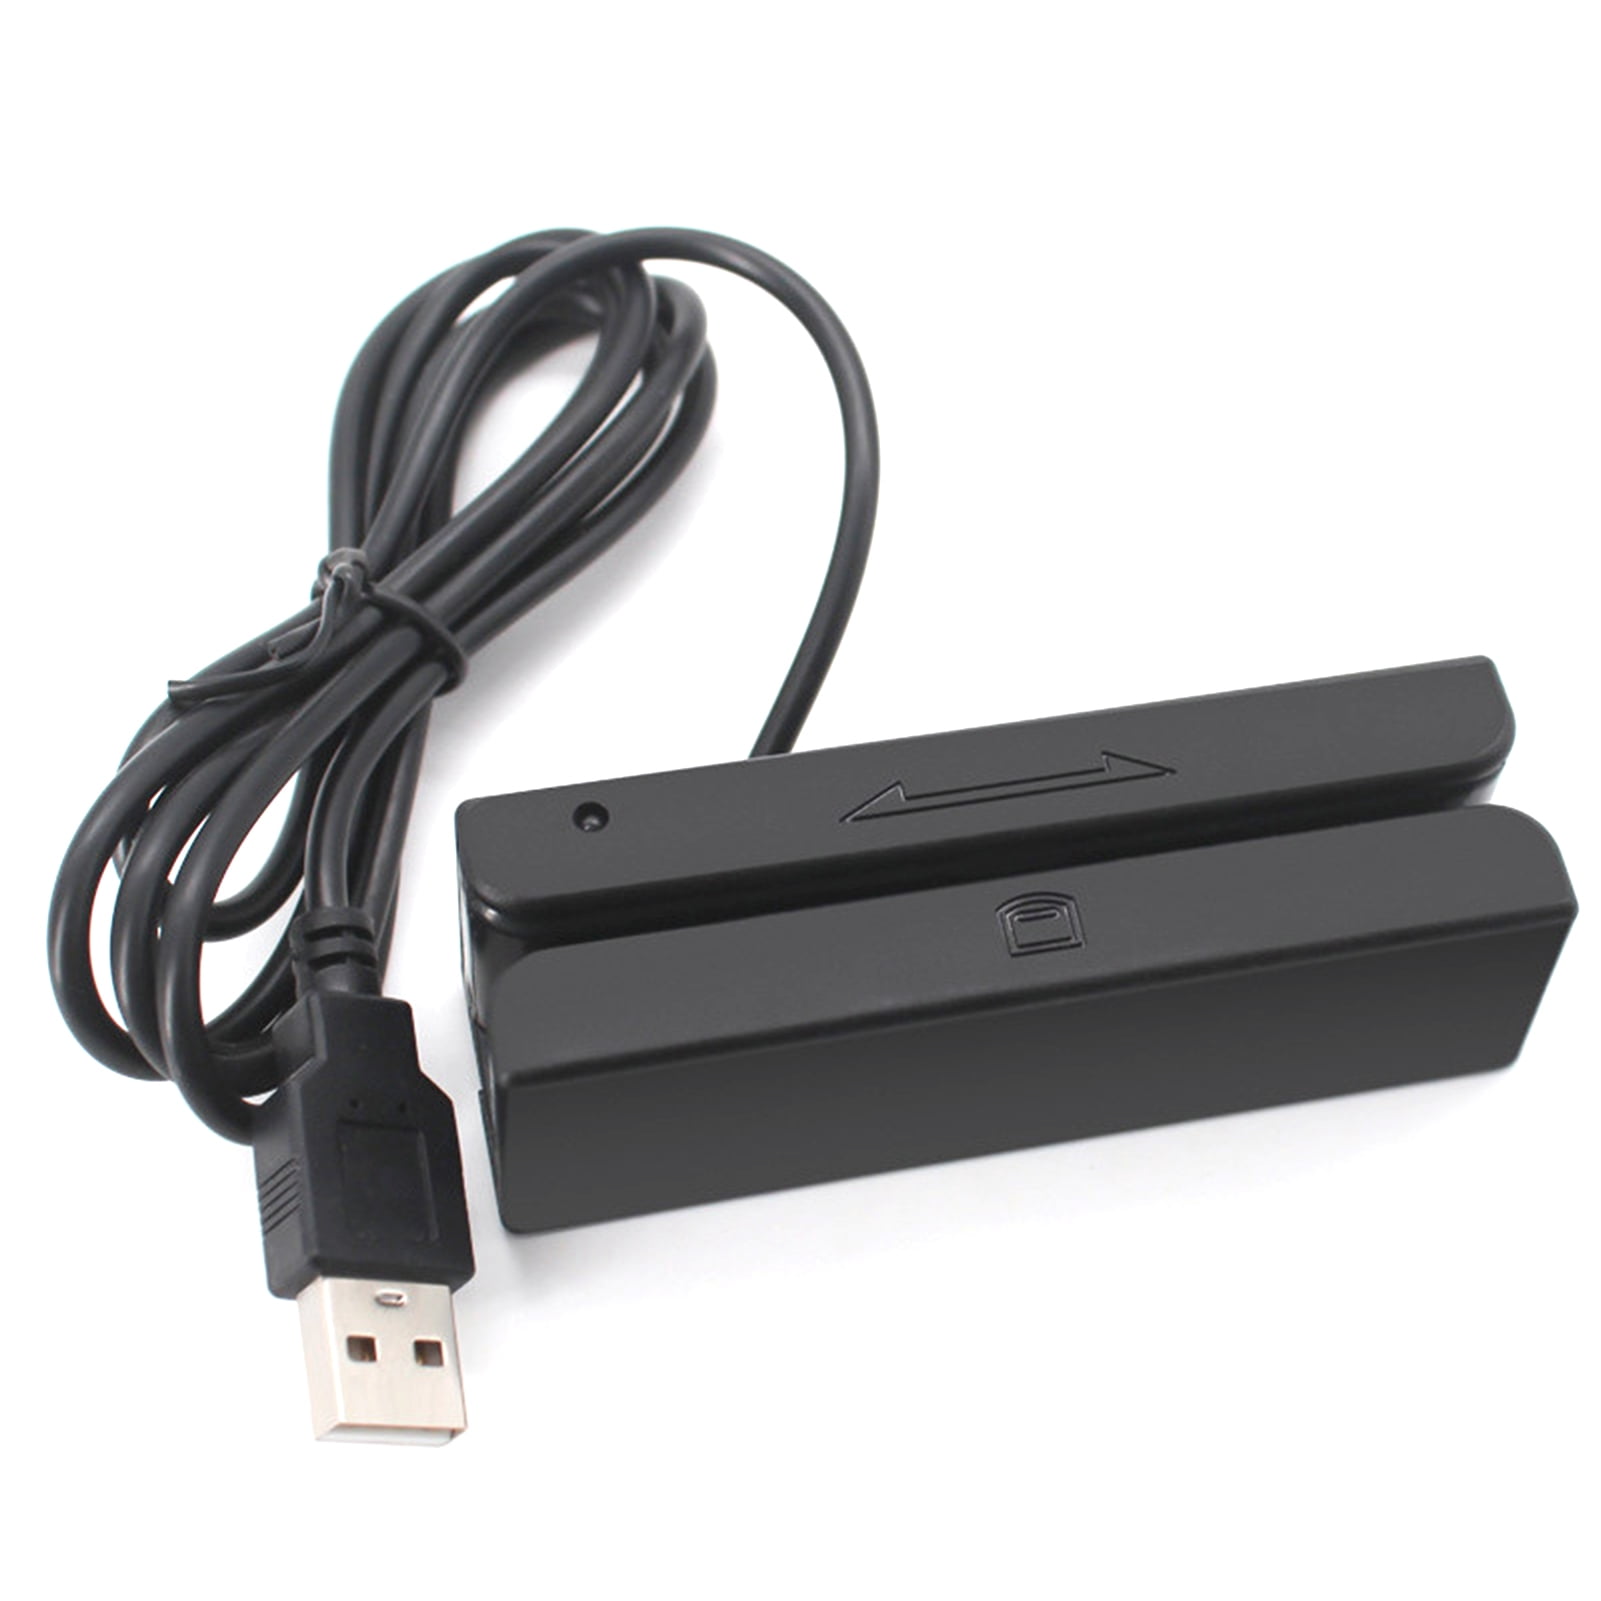 USB Magnetic Credit Card Reader Swiper POS Cashier Mac Window Intuit Quickbook 